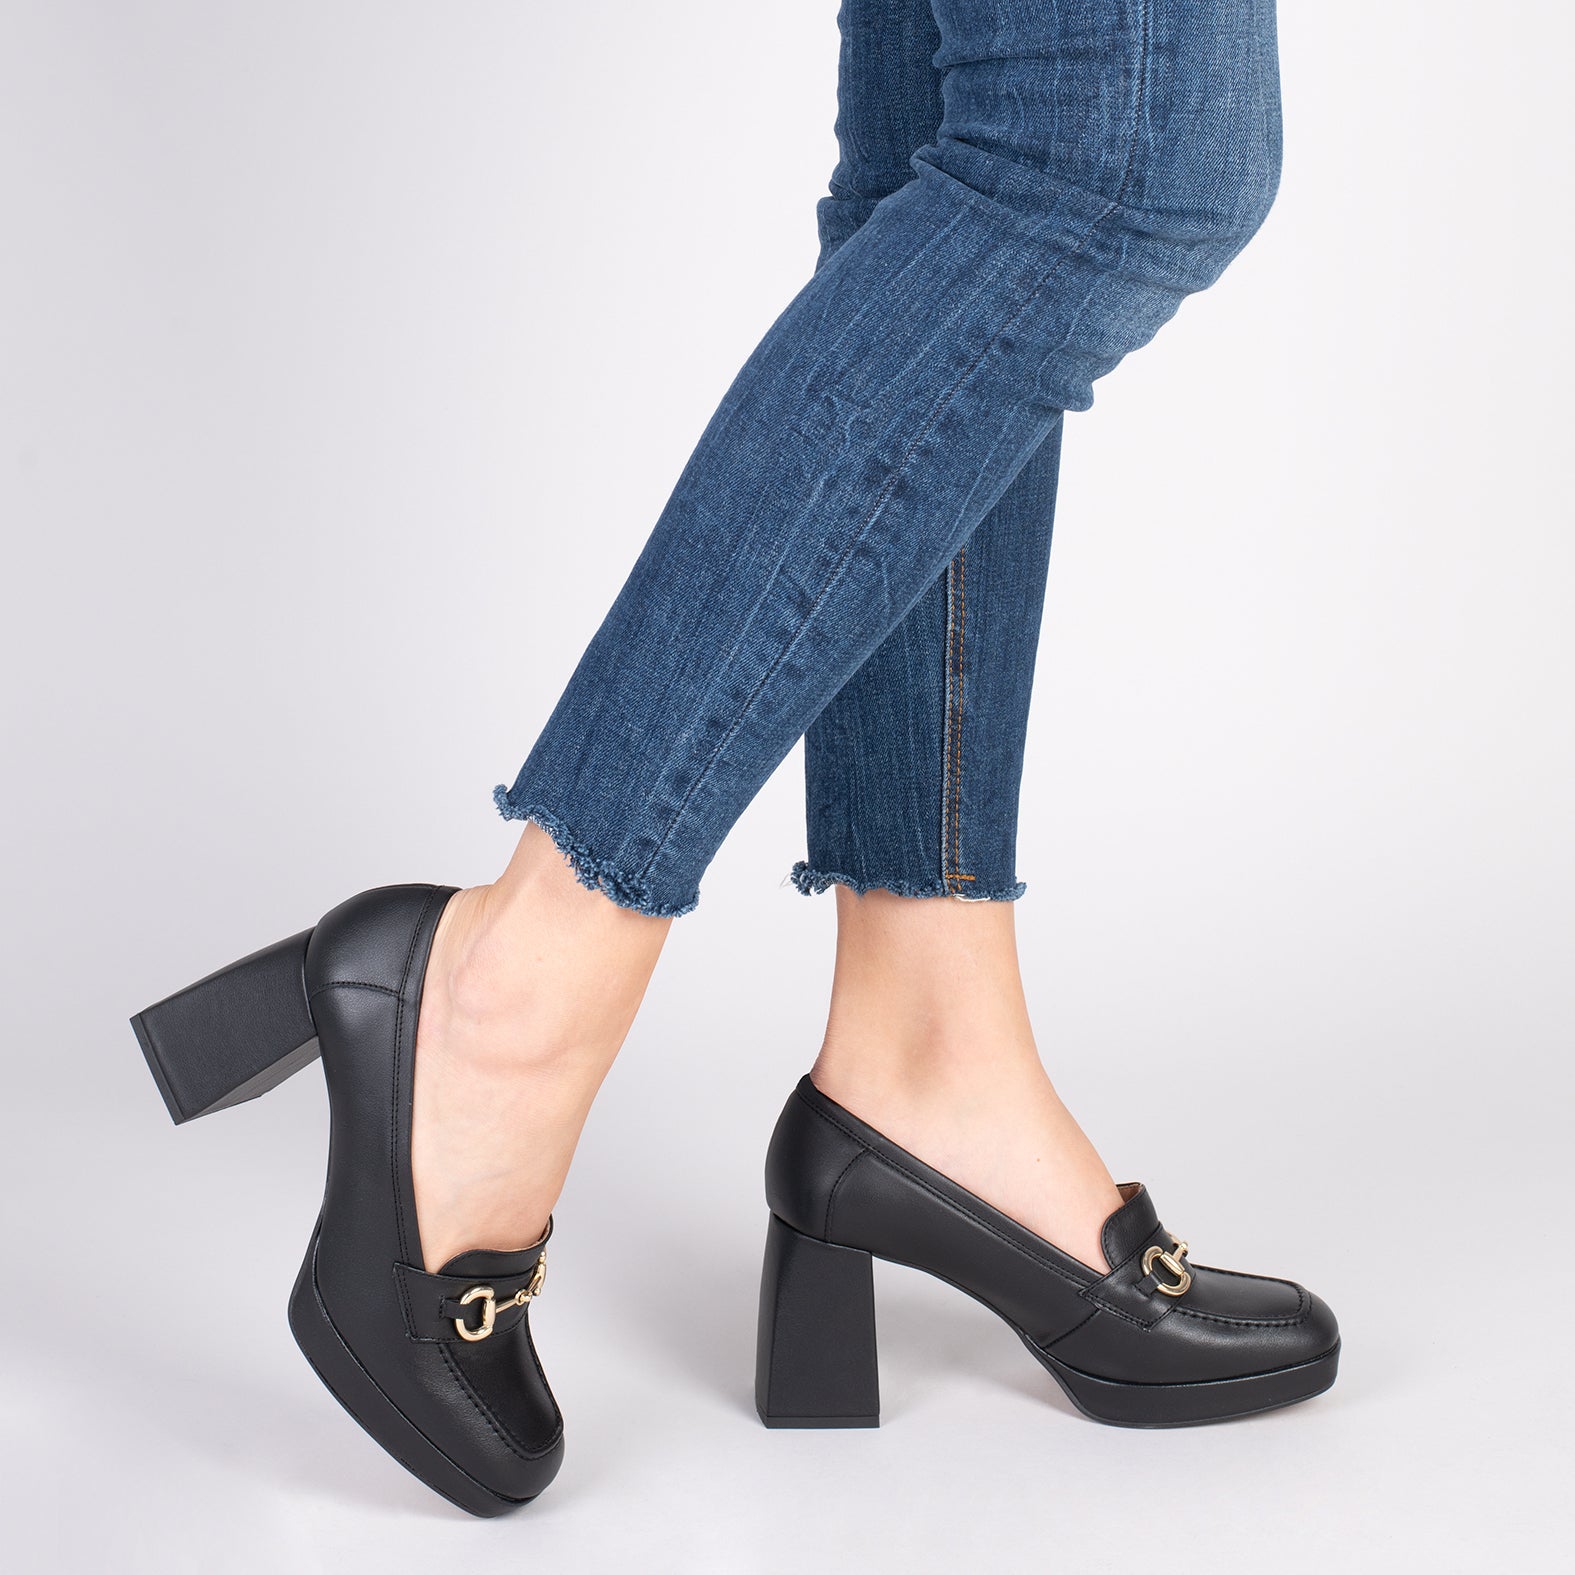 ANNETTE – BLACK moccasins with block heel and platform